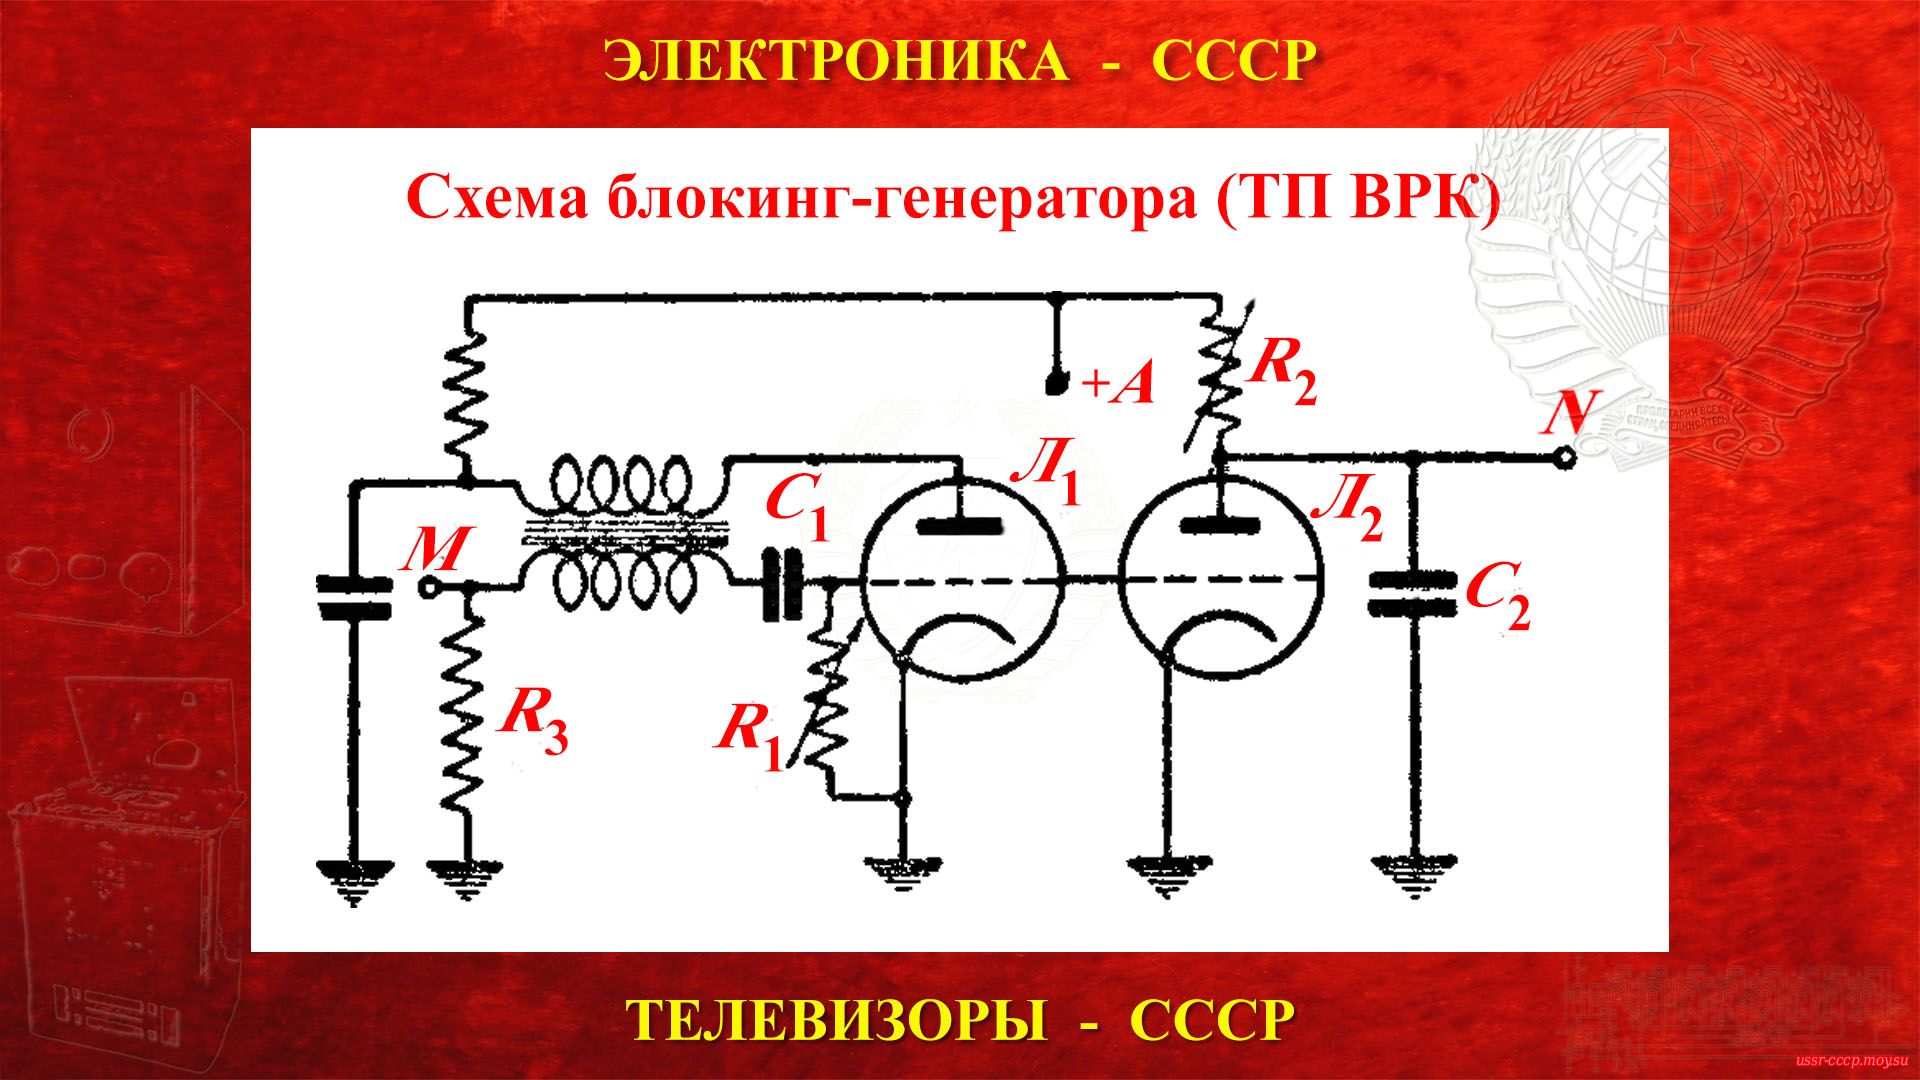 Схема блокинг-генератора (ТК ВРК)